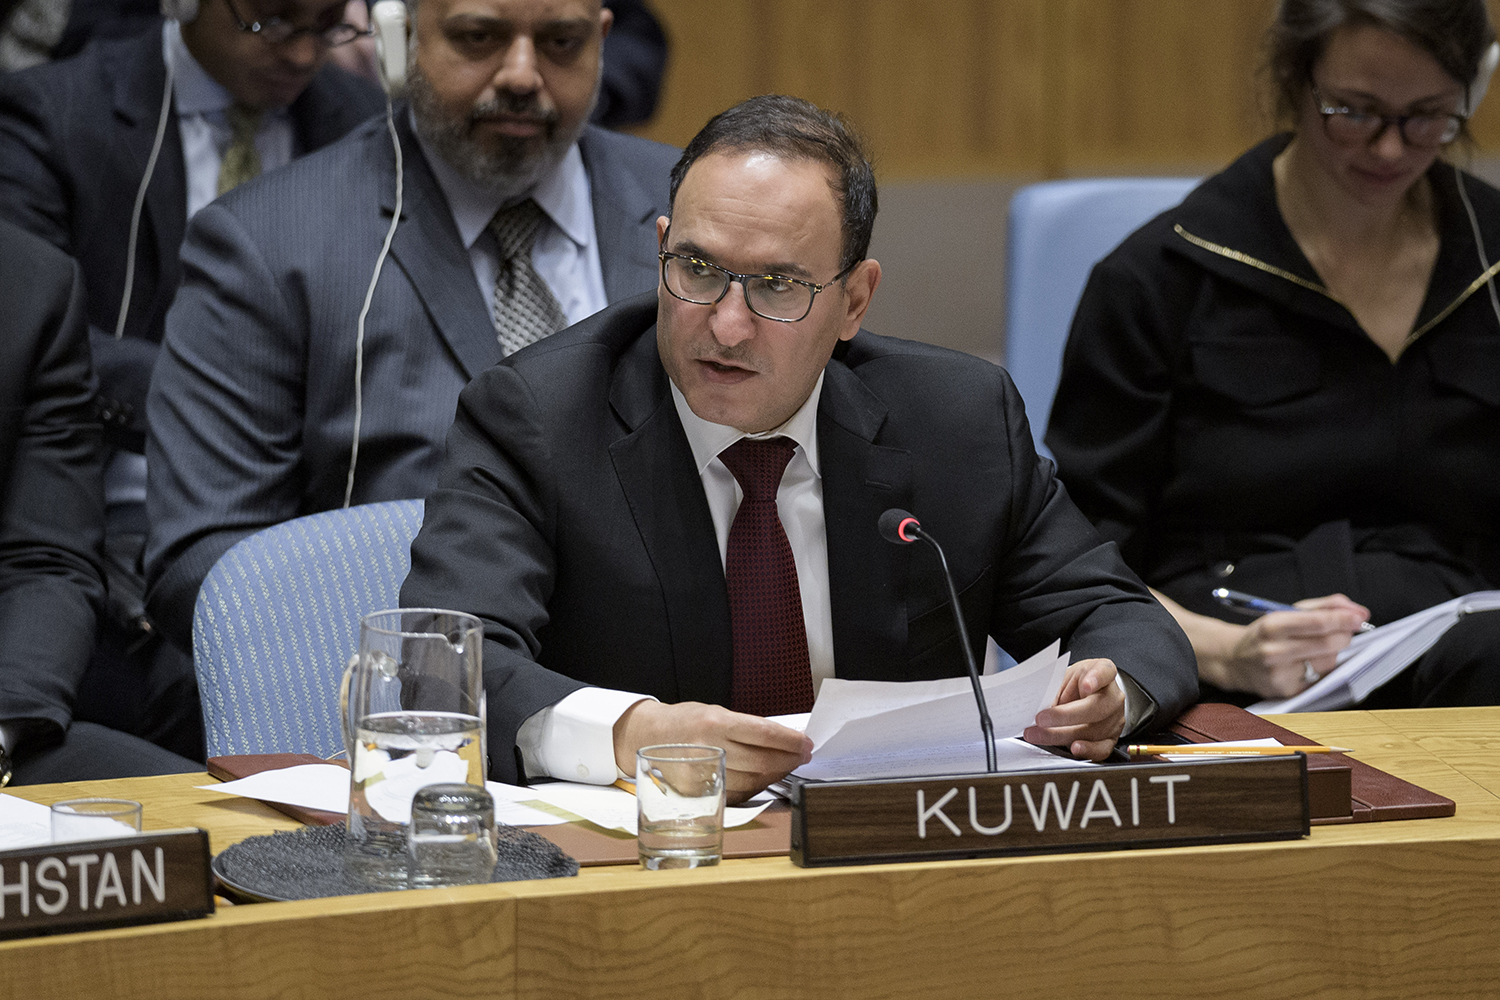 The permanent representative of Kuwait to the United Nations Ambassador Mansour Al-Otaibi